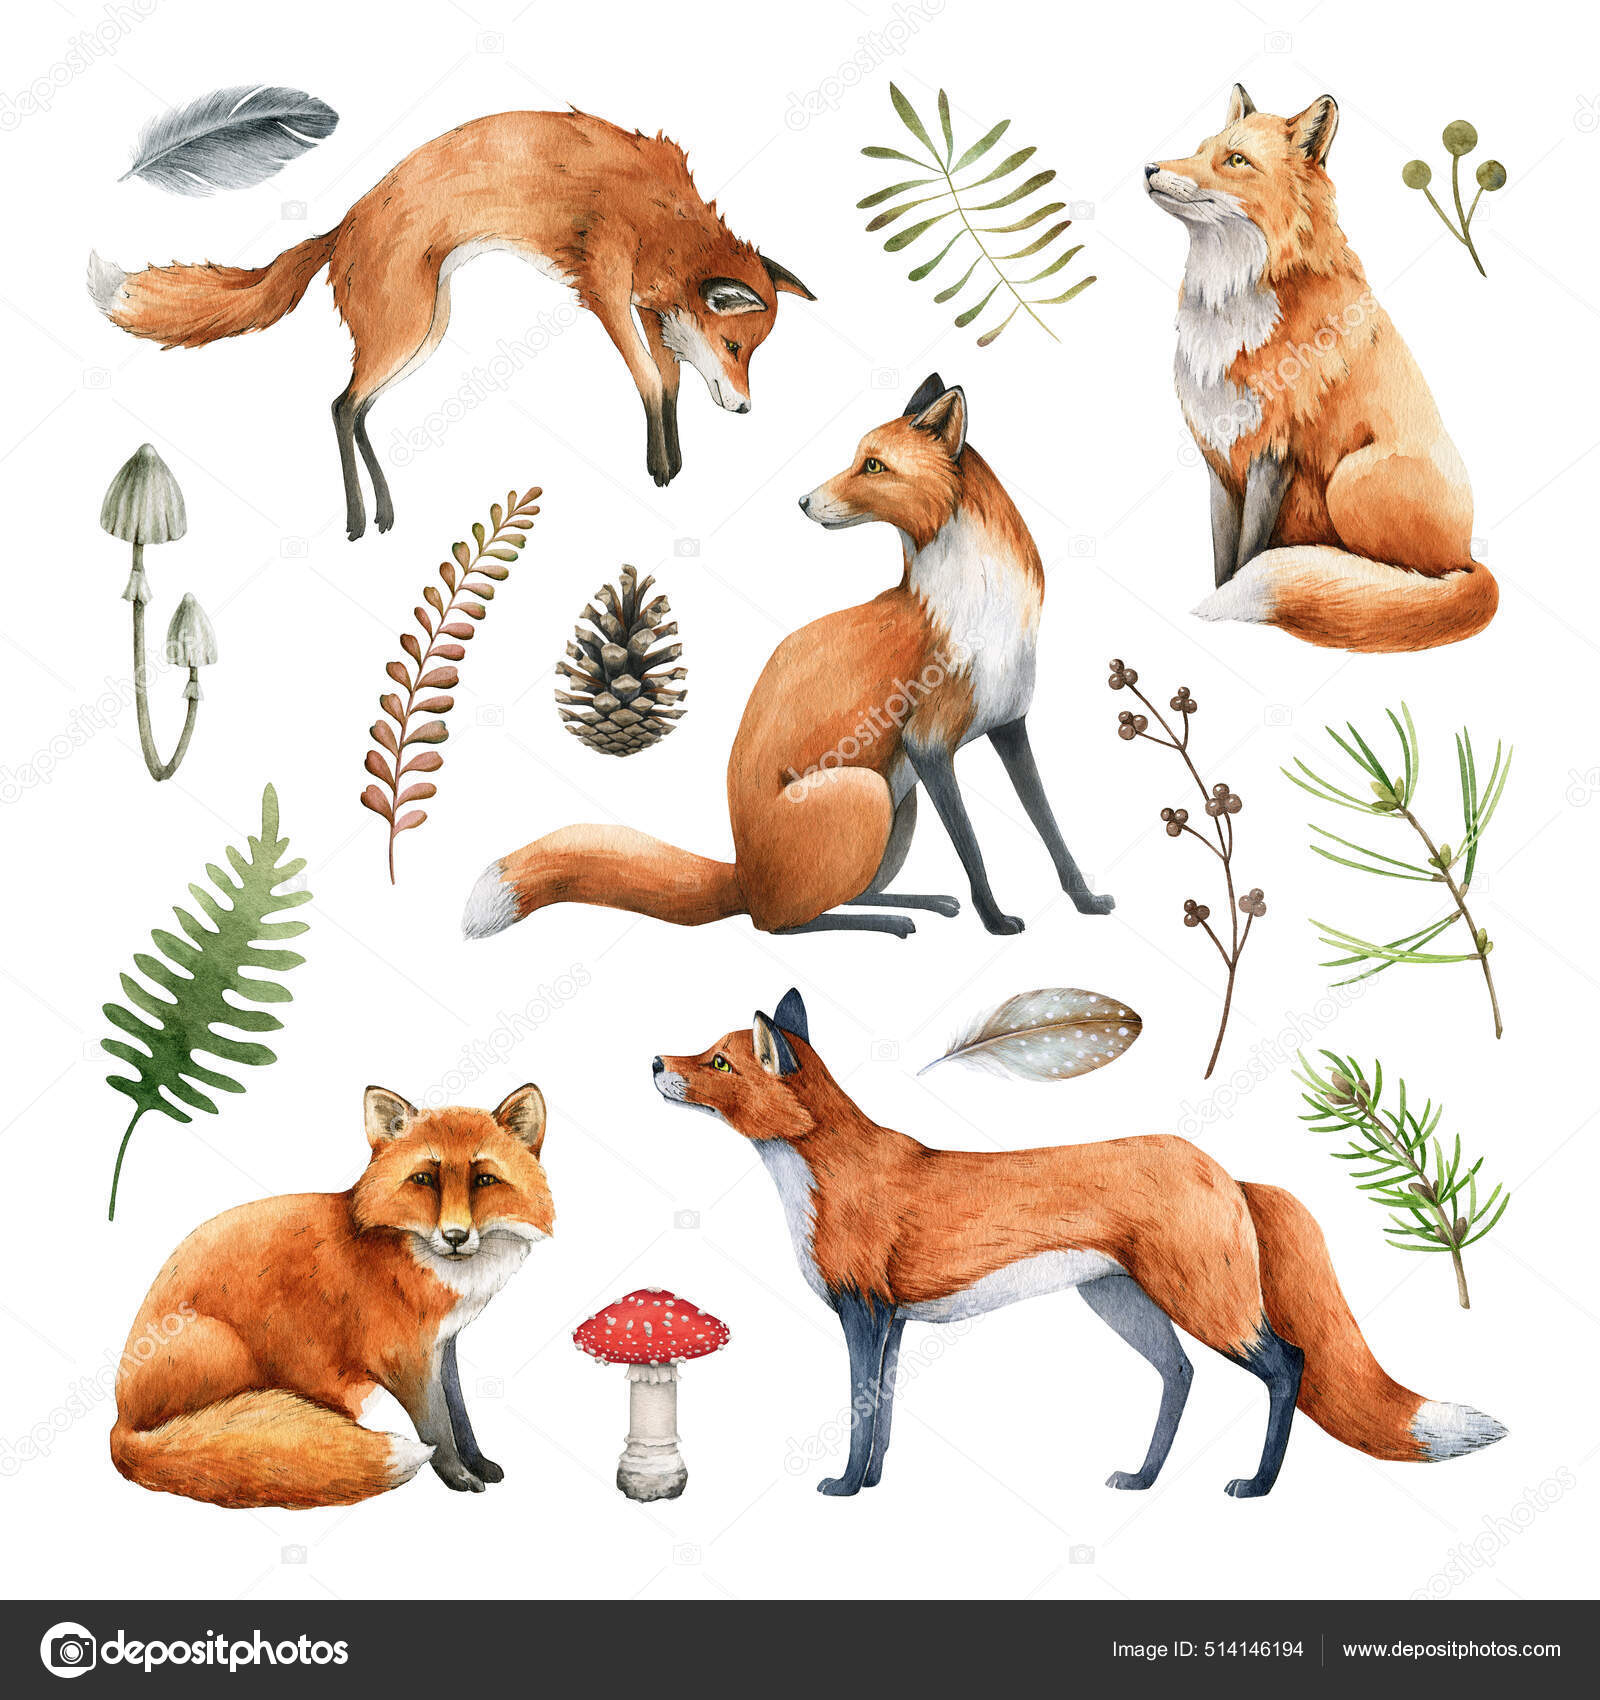 https://st.depositphotos.com/26145420/51414/i/1600/depositphotos_514146194-stock-illustration-fox-animal-watercolor-illustration-set.jpg